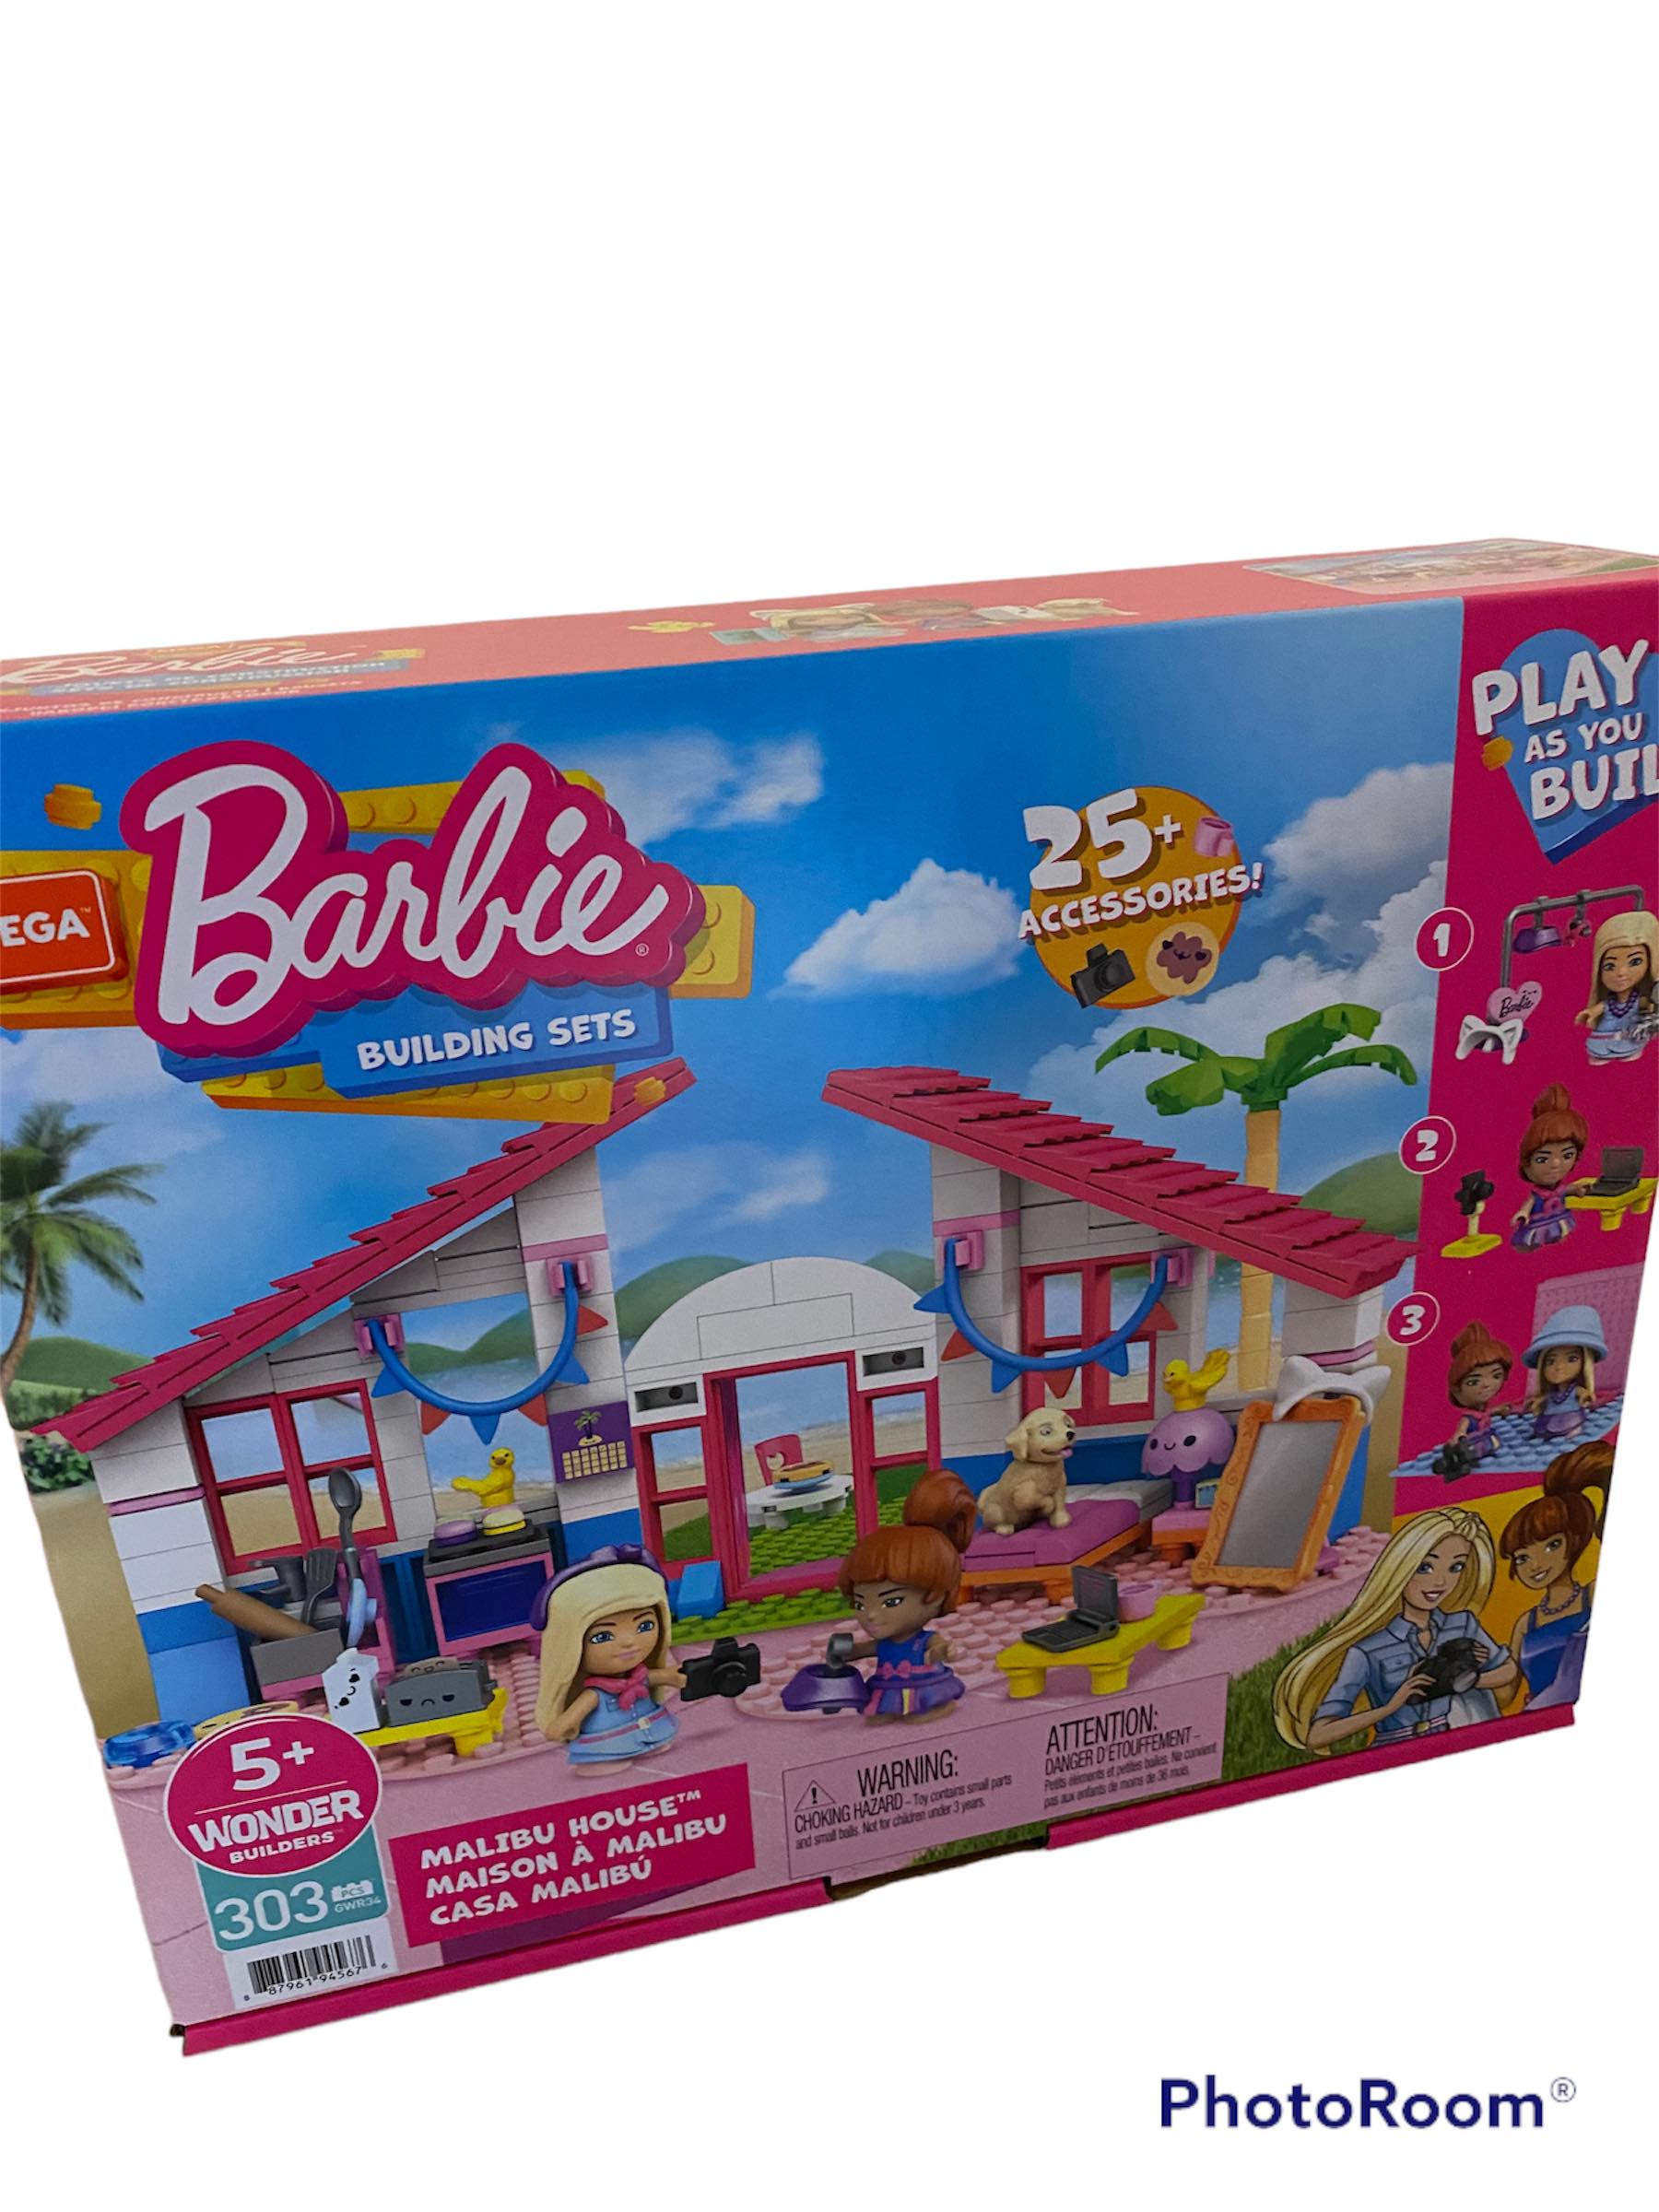 Barbie Malibu House - Building Set - BOXED & NEW